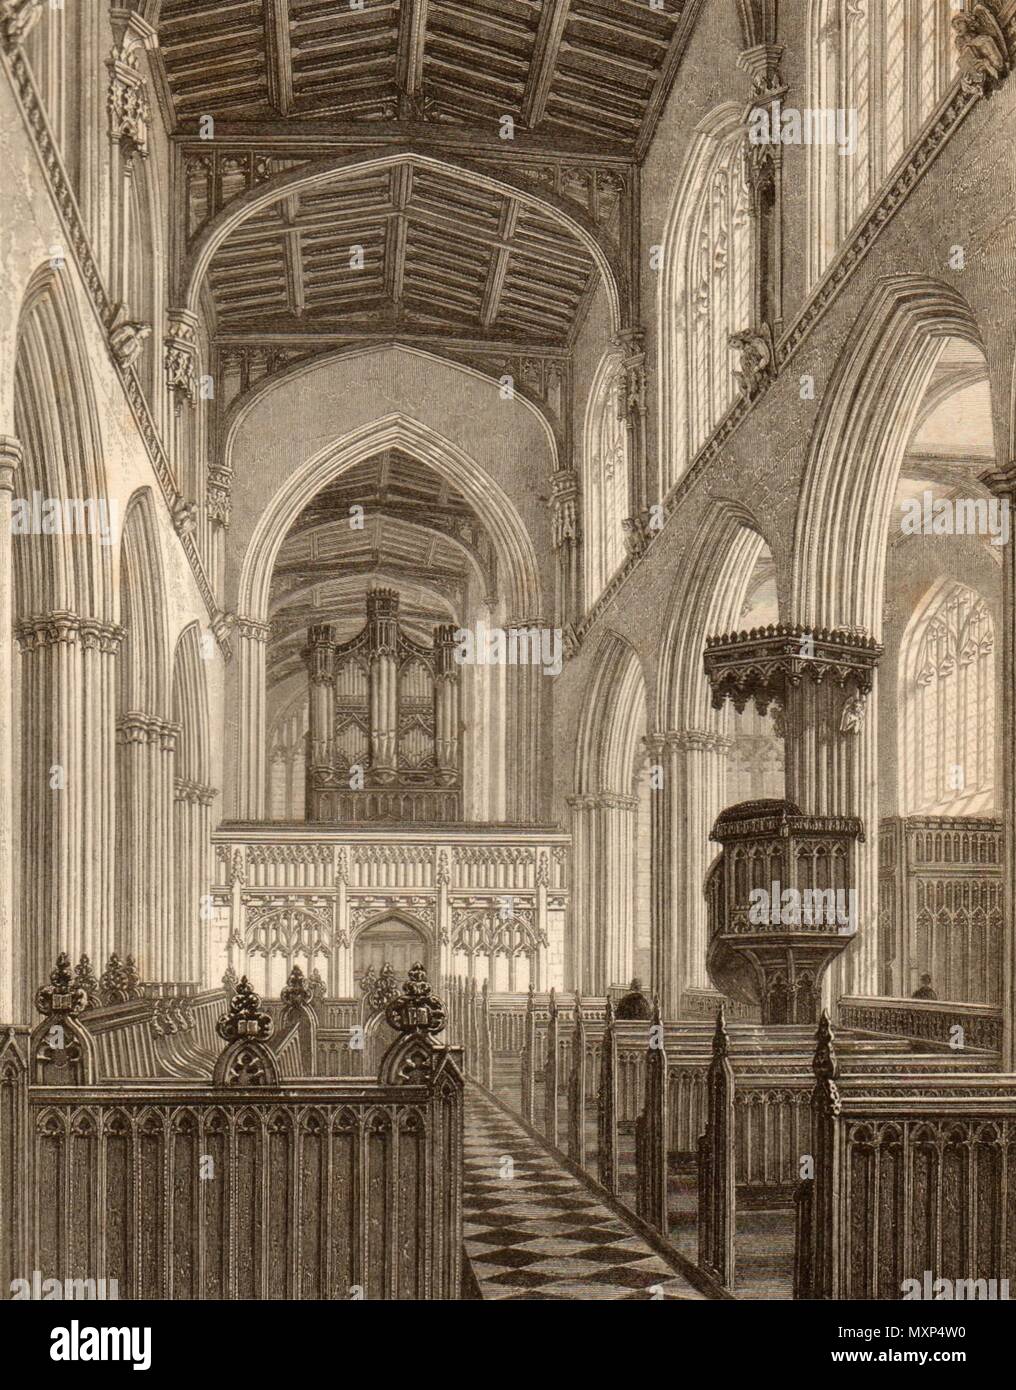 Innenraum der Jungfrau Maria Kirche, Oxford, von John Le Keux 1837 Drucken Stockfoto